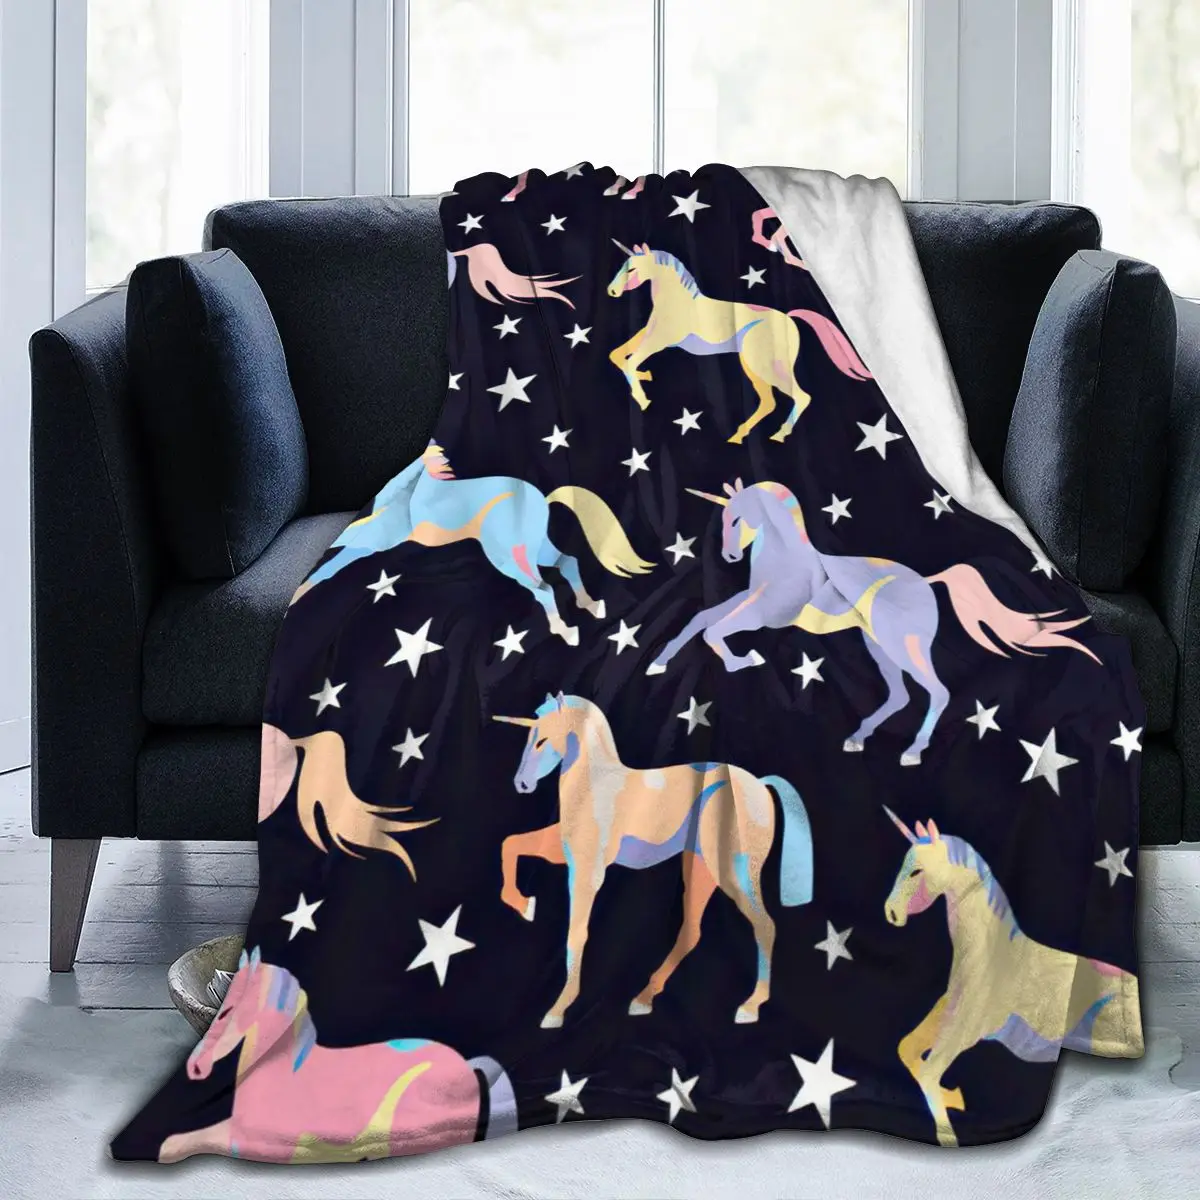 

Super Soft Sofa Blanket Plaid Collage Sublimation Cartoon Animation Bedding Flannel Bedroom Decorative Blanket Camas Grinch